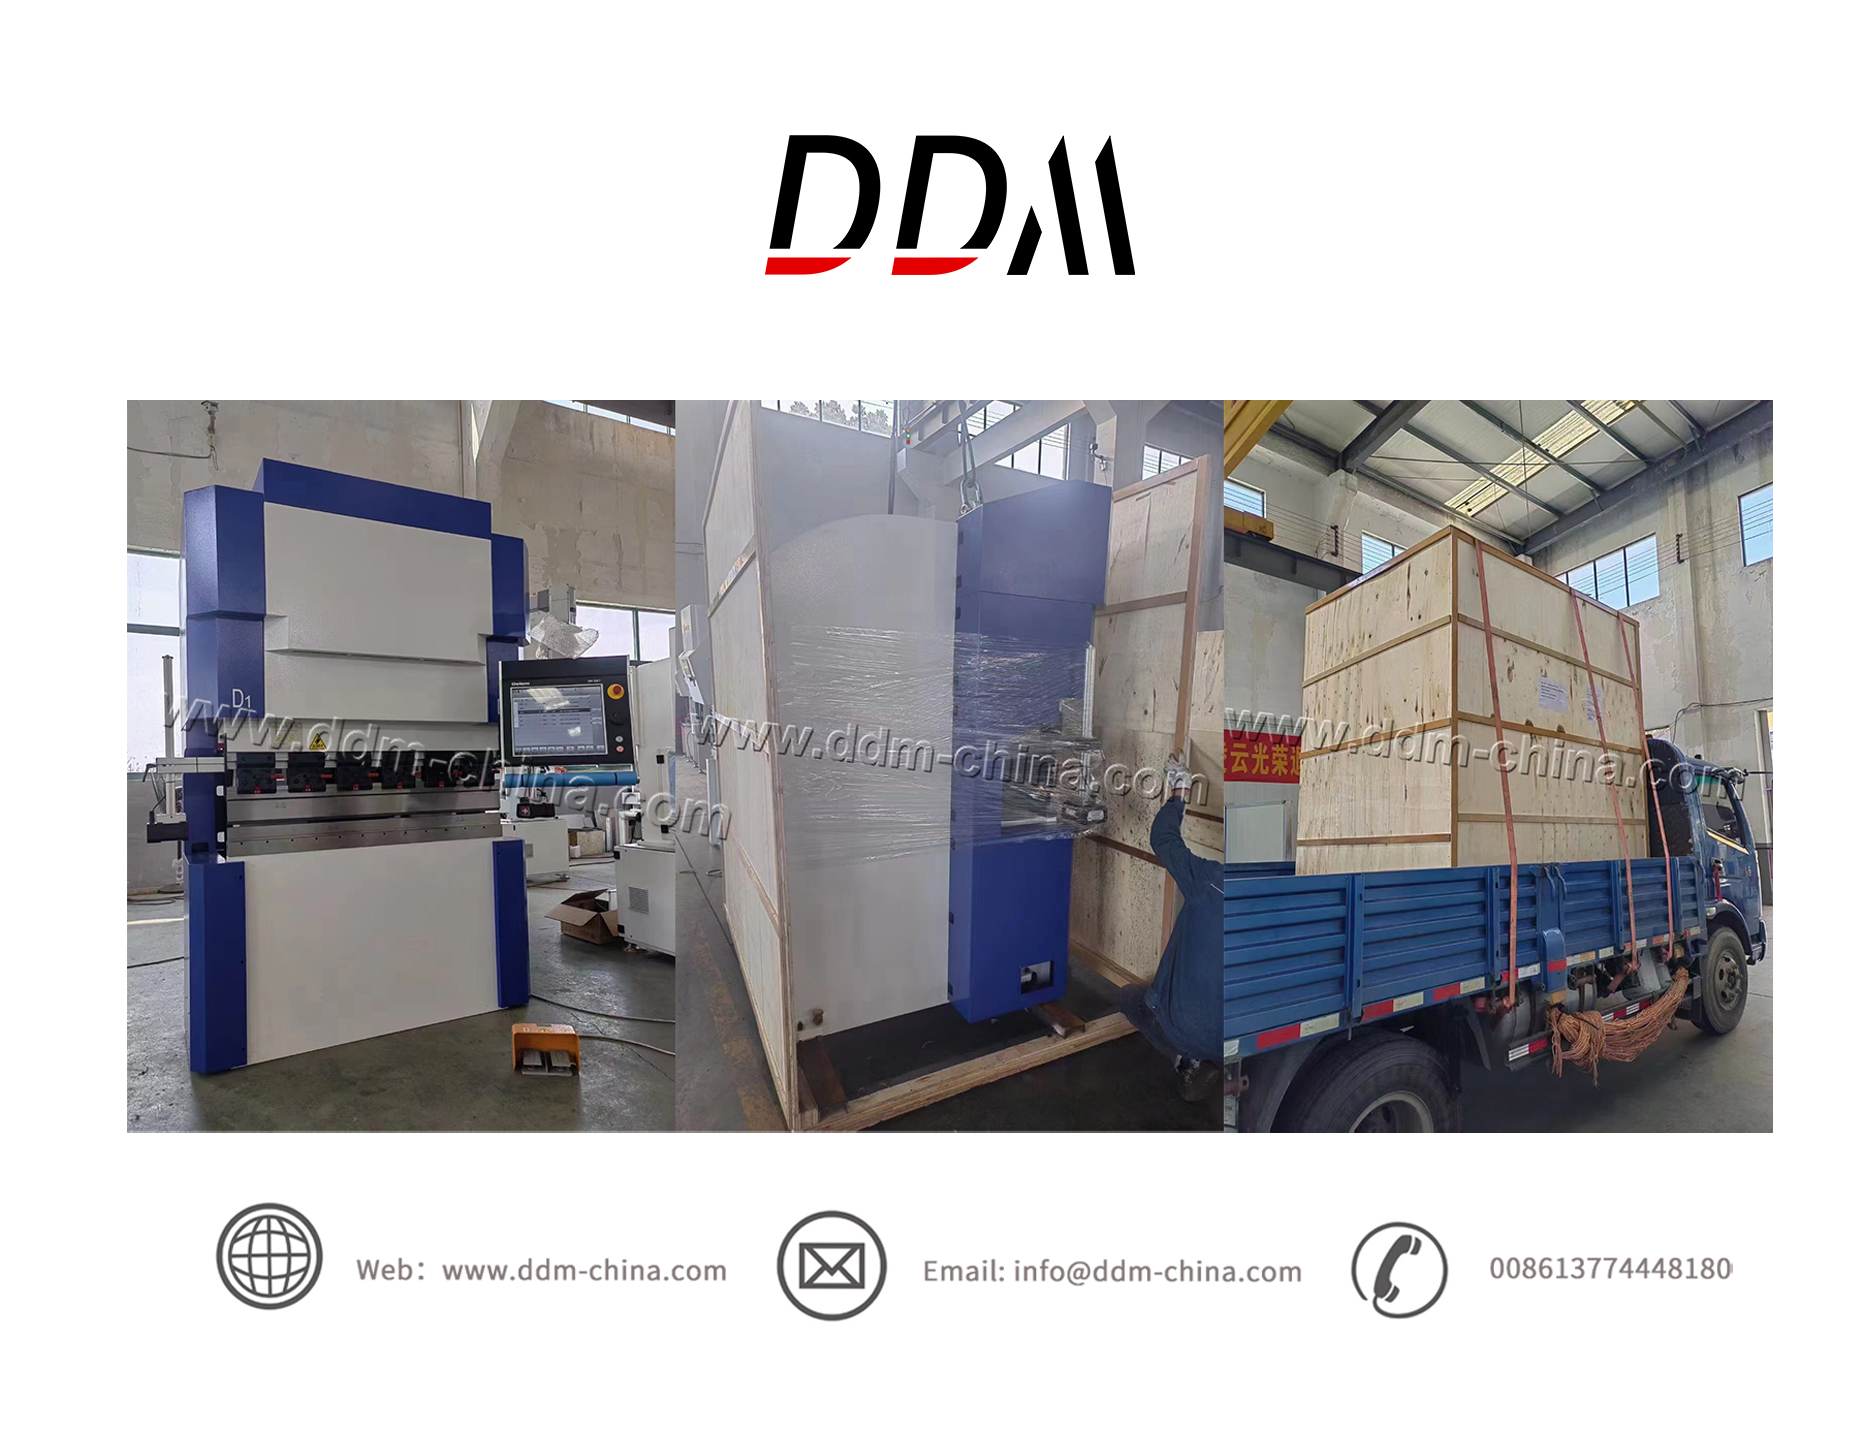 electrical press brake provided by DDM Company 